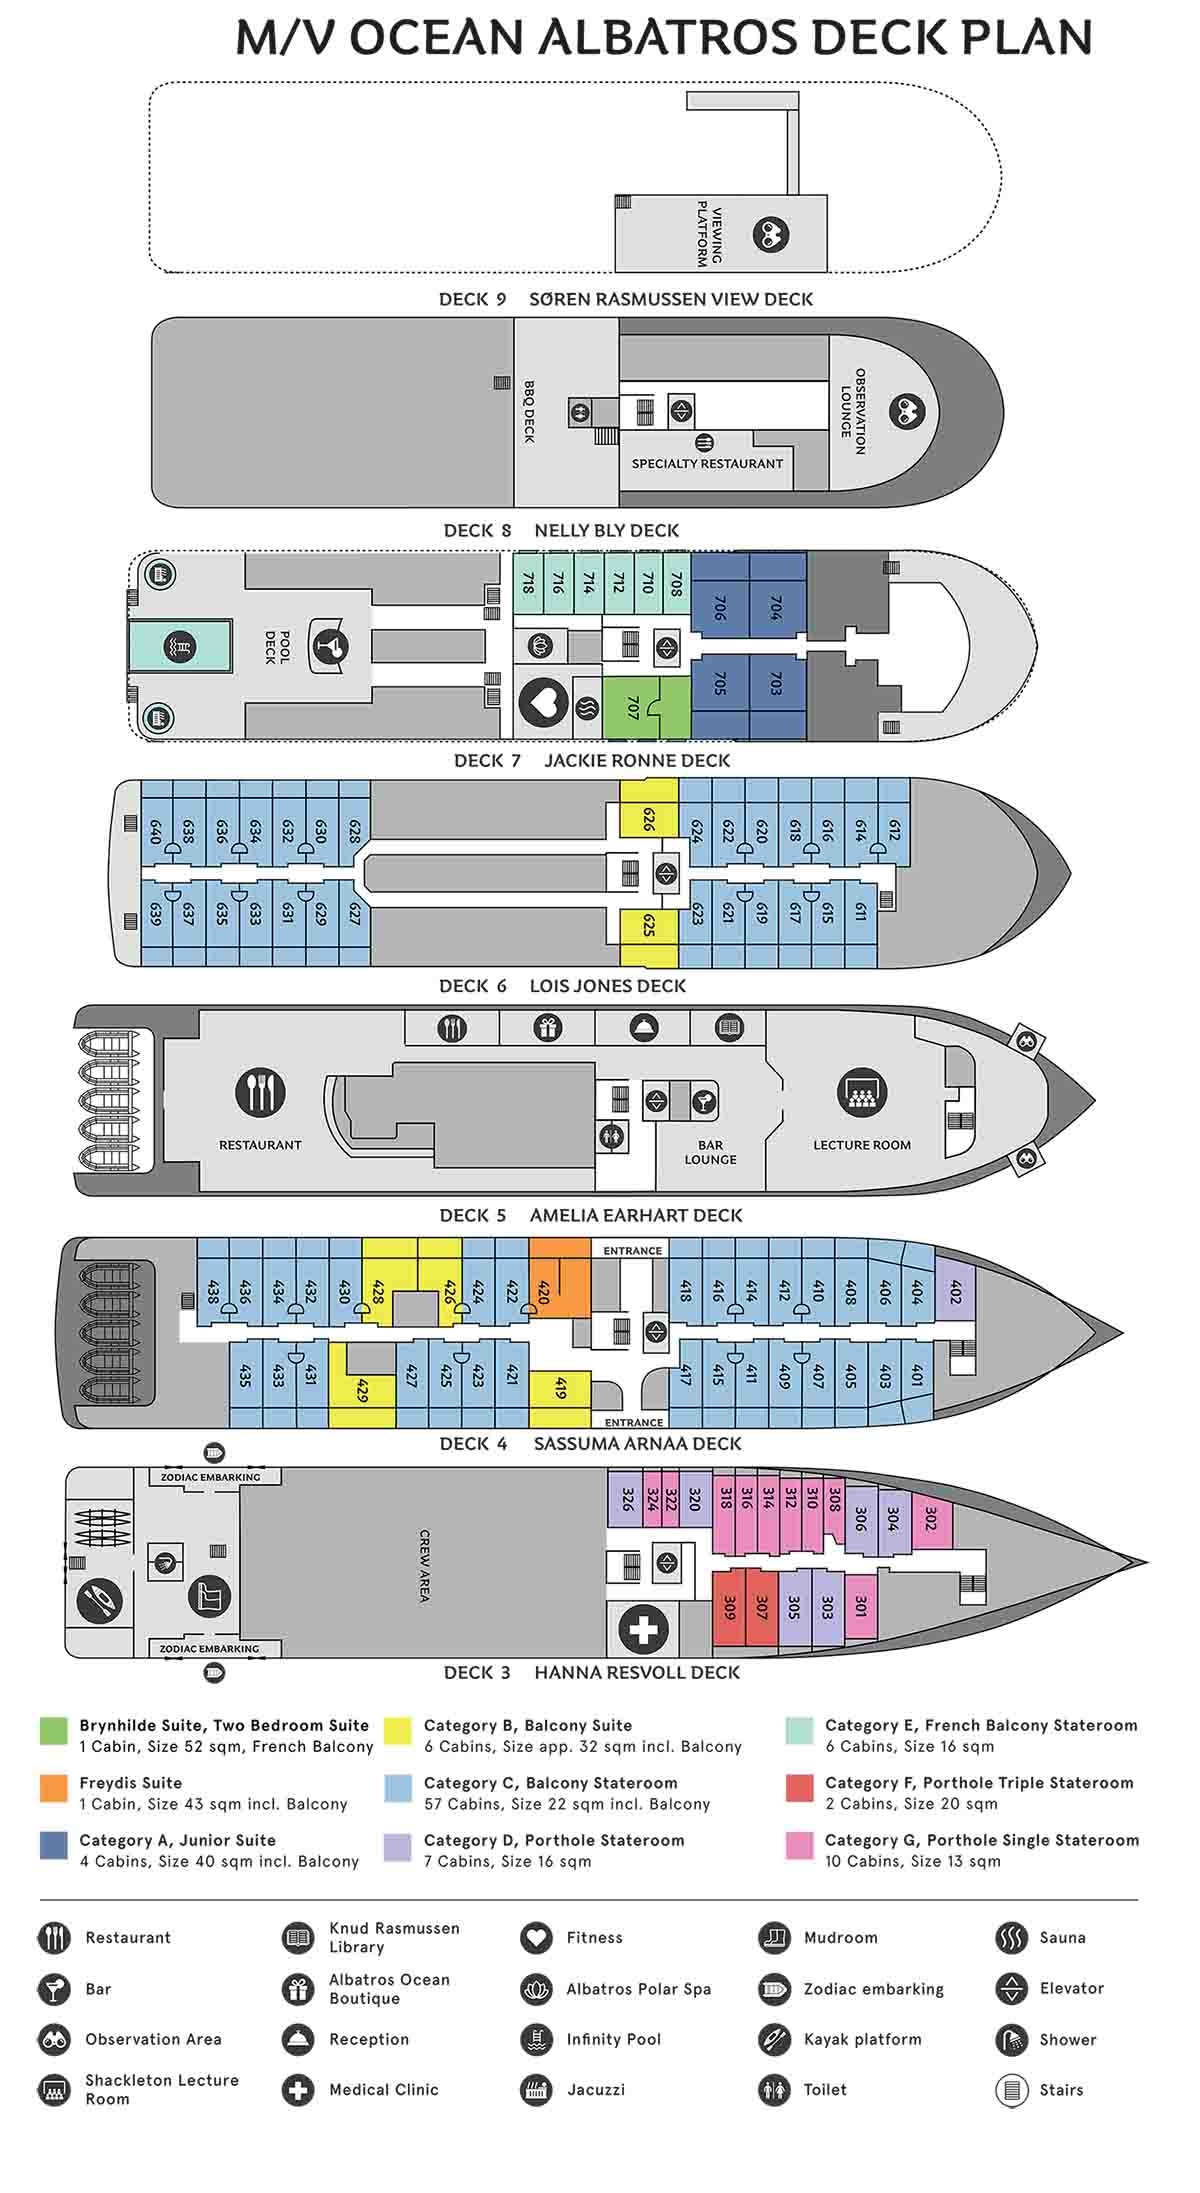 Deck plans | Ocean Albatros